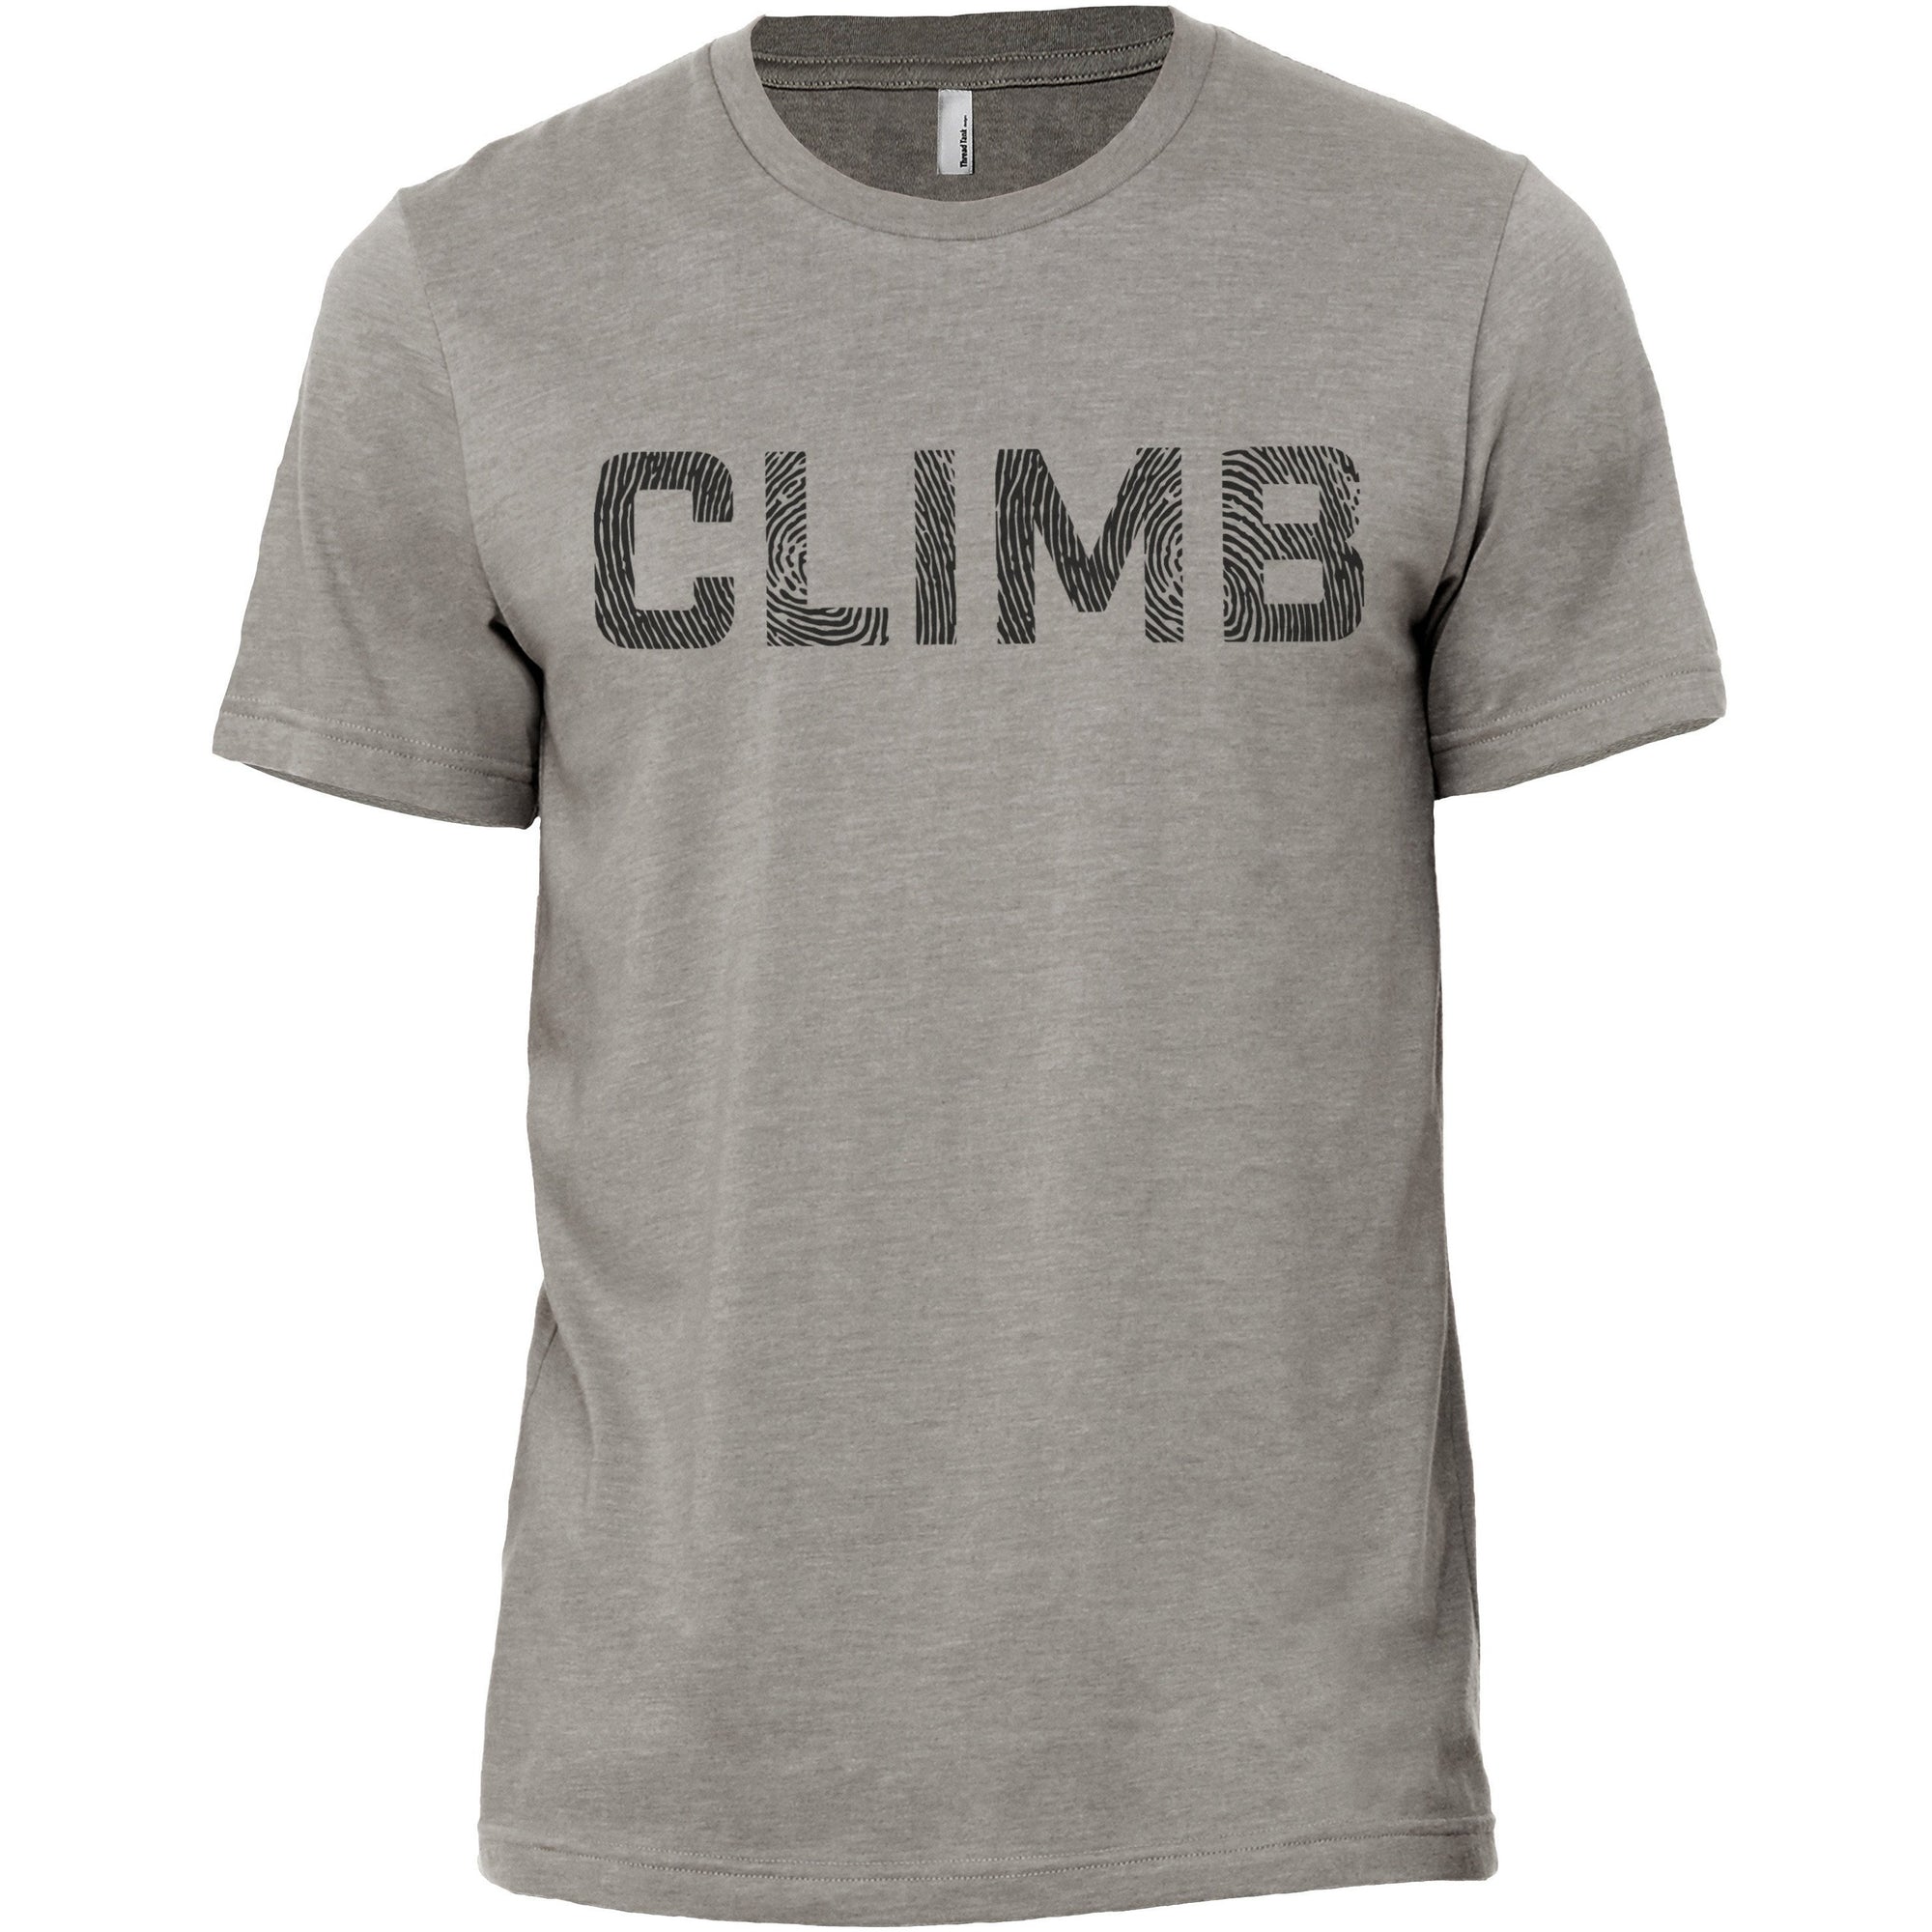 Climb Military Grey Printed Graphic Men's Crew T-Shirt Tee